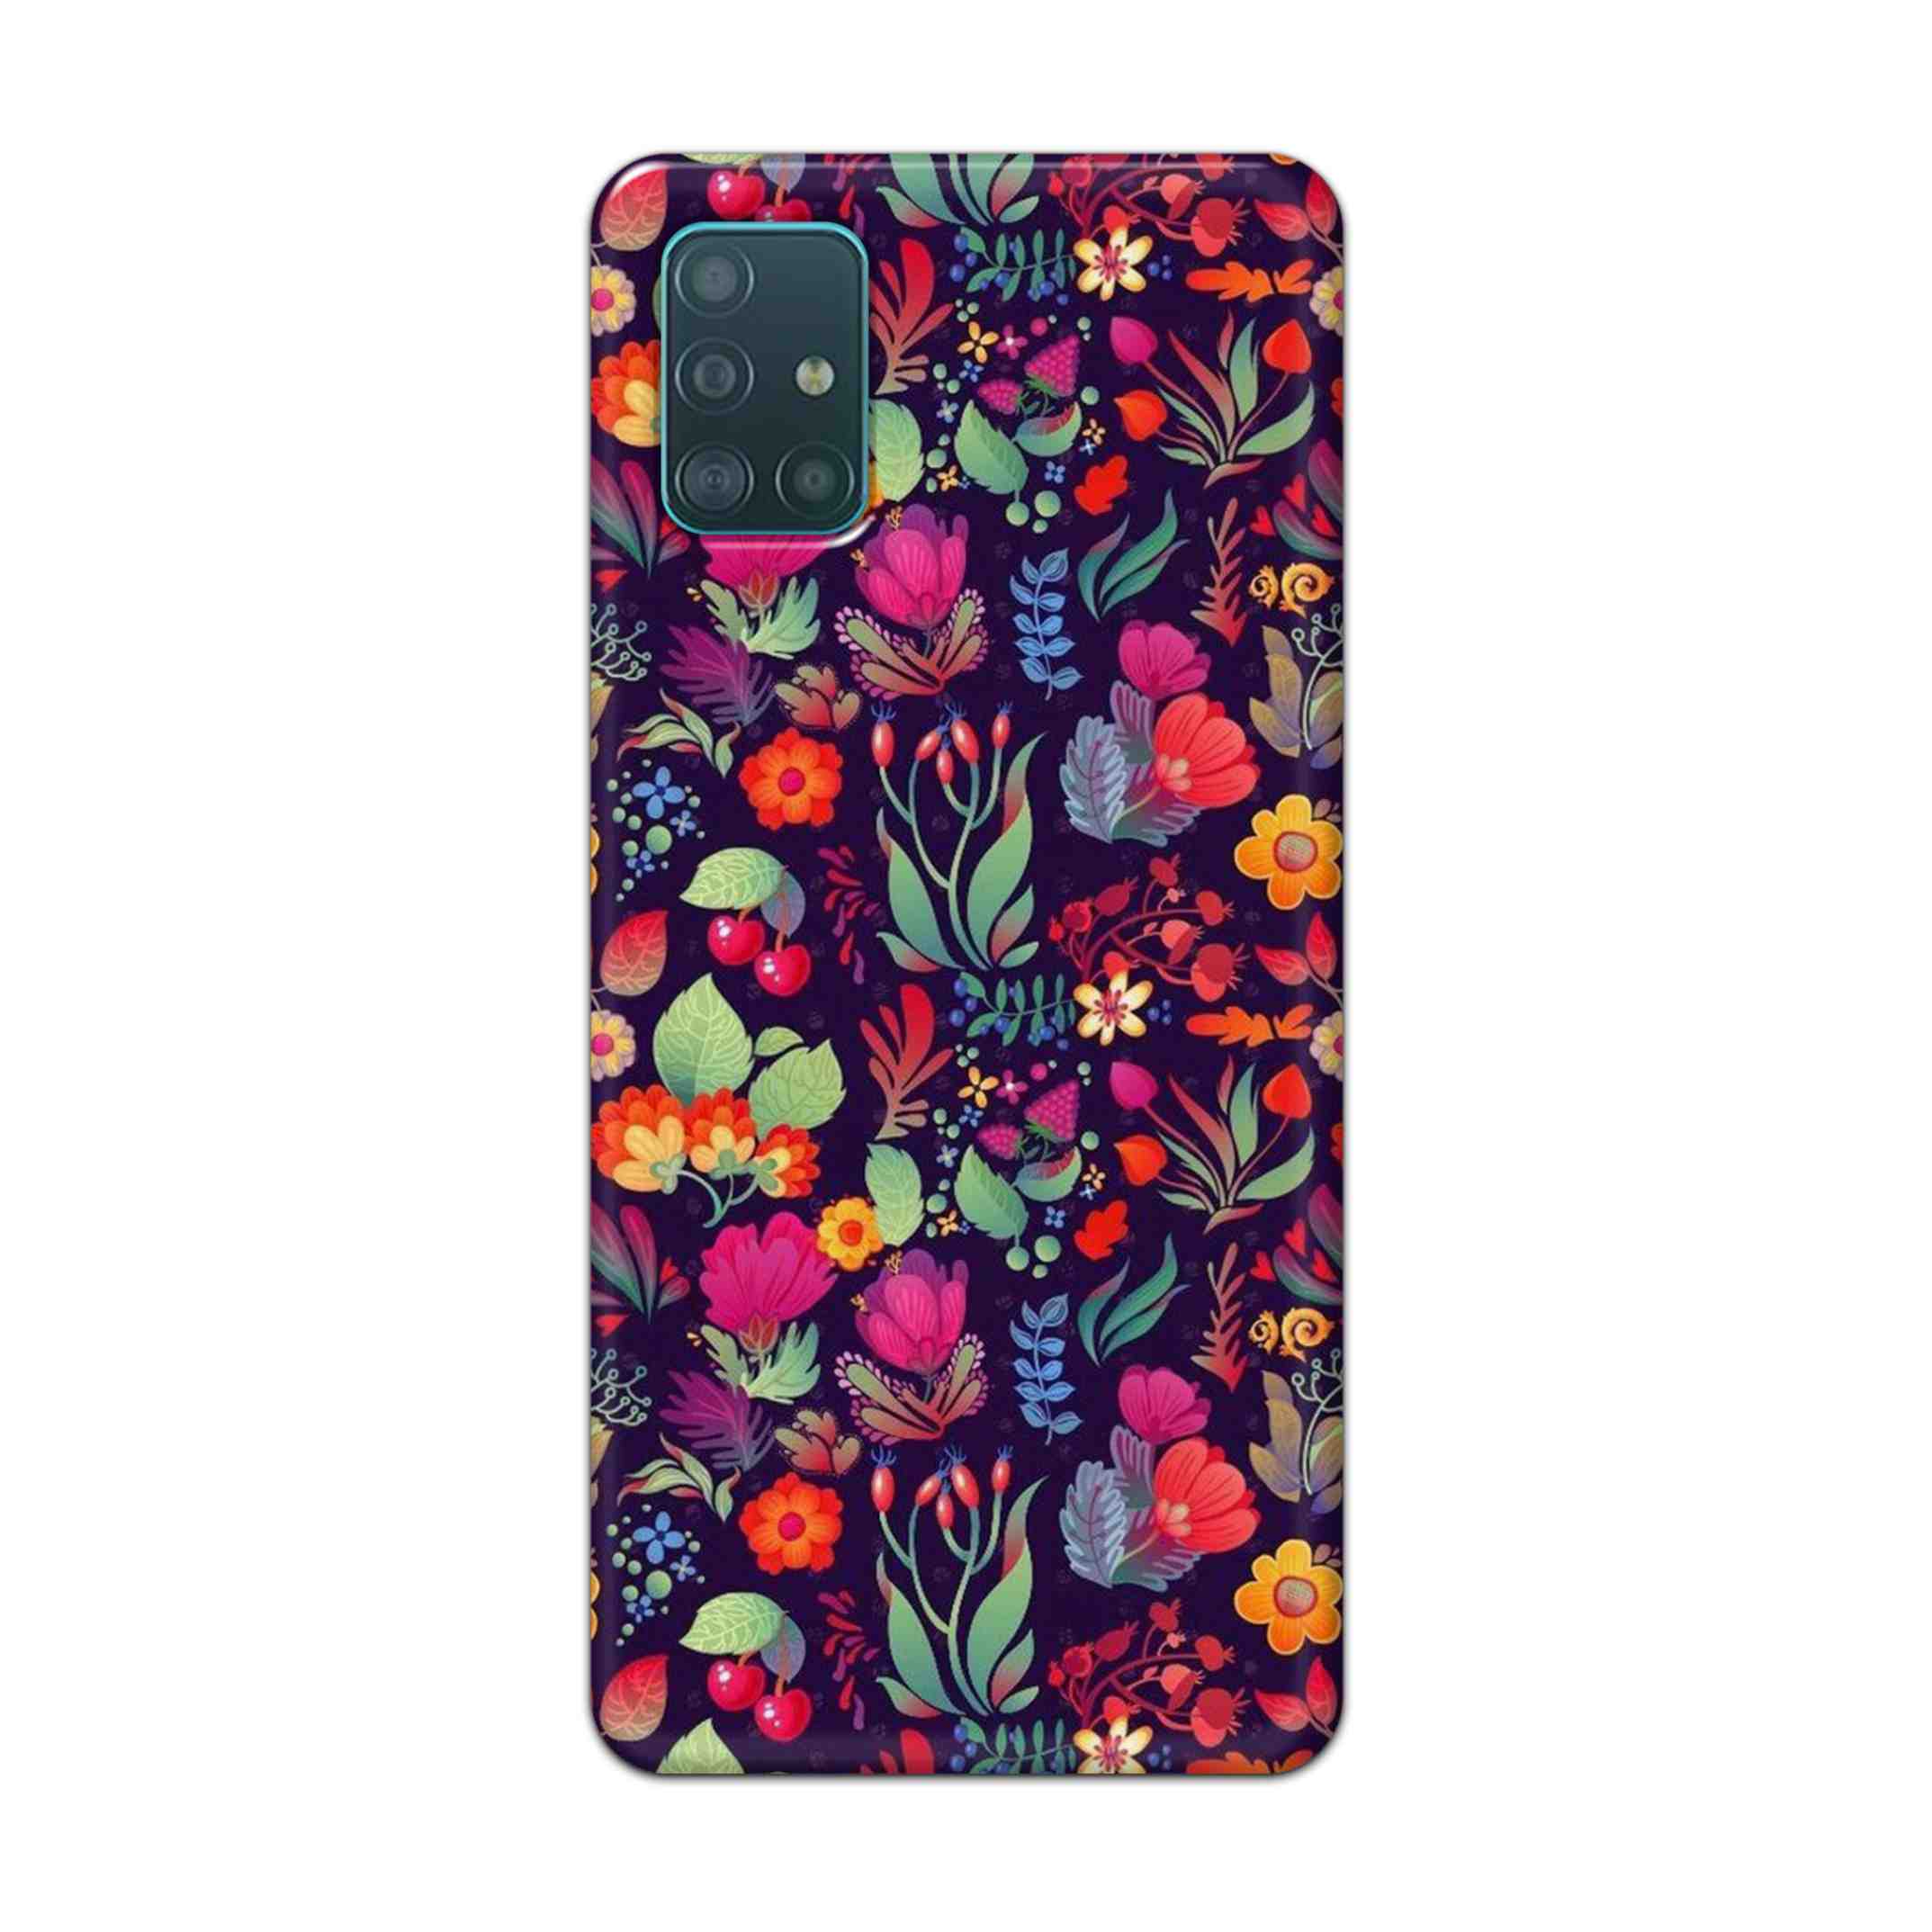 Buy Fruits Flower Hard Back Mobile Phone Case Cover For Samsung A51 Online